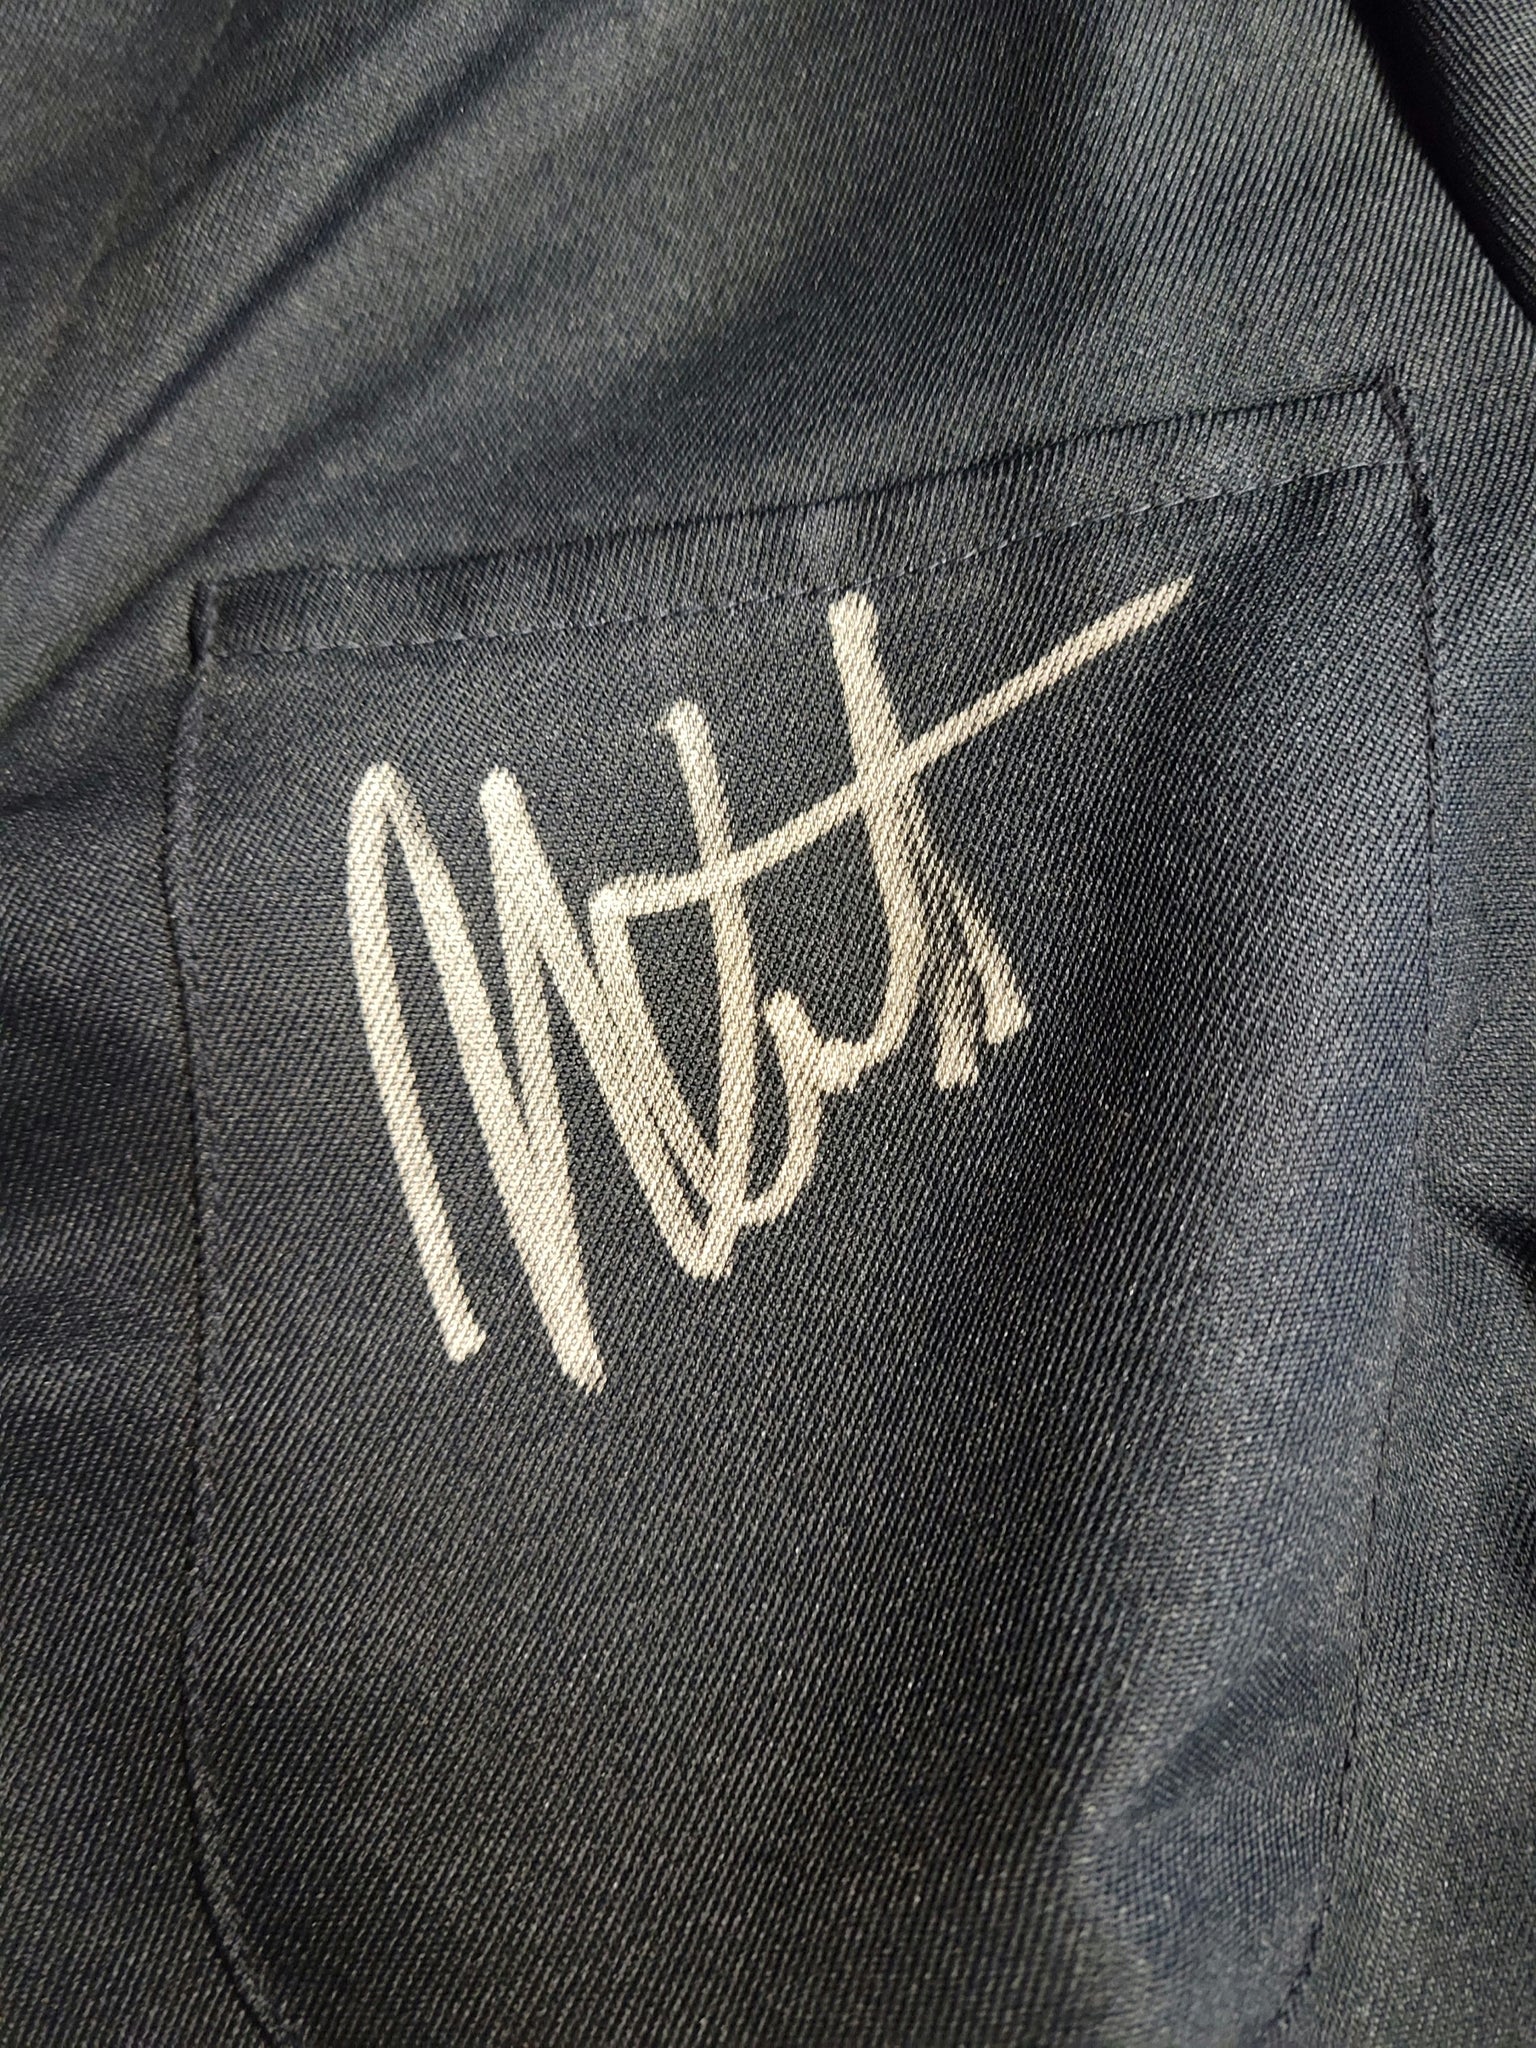 Nick Castle Authentic Signed Jumpsuit Coverall Autographed JSA-